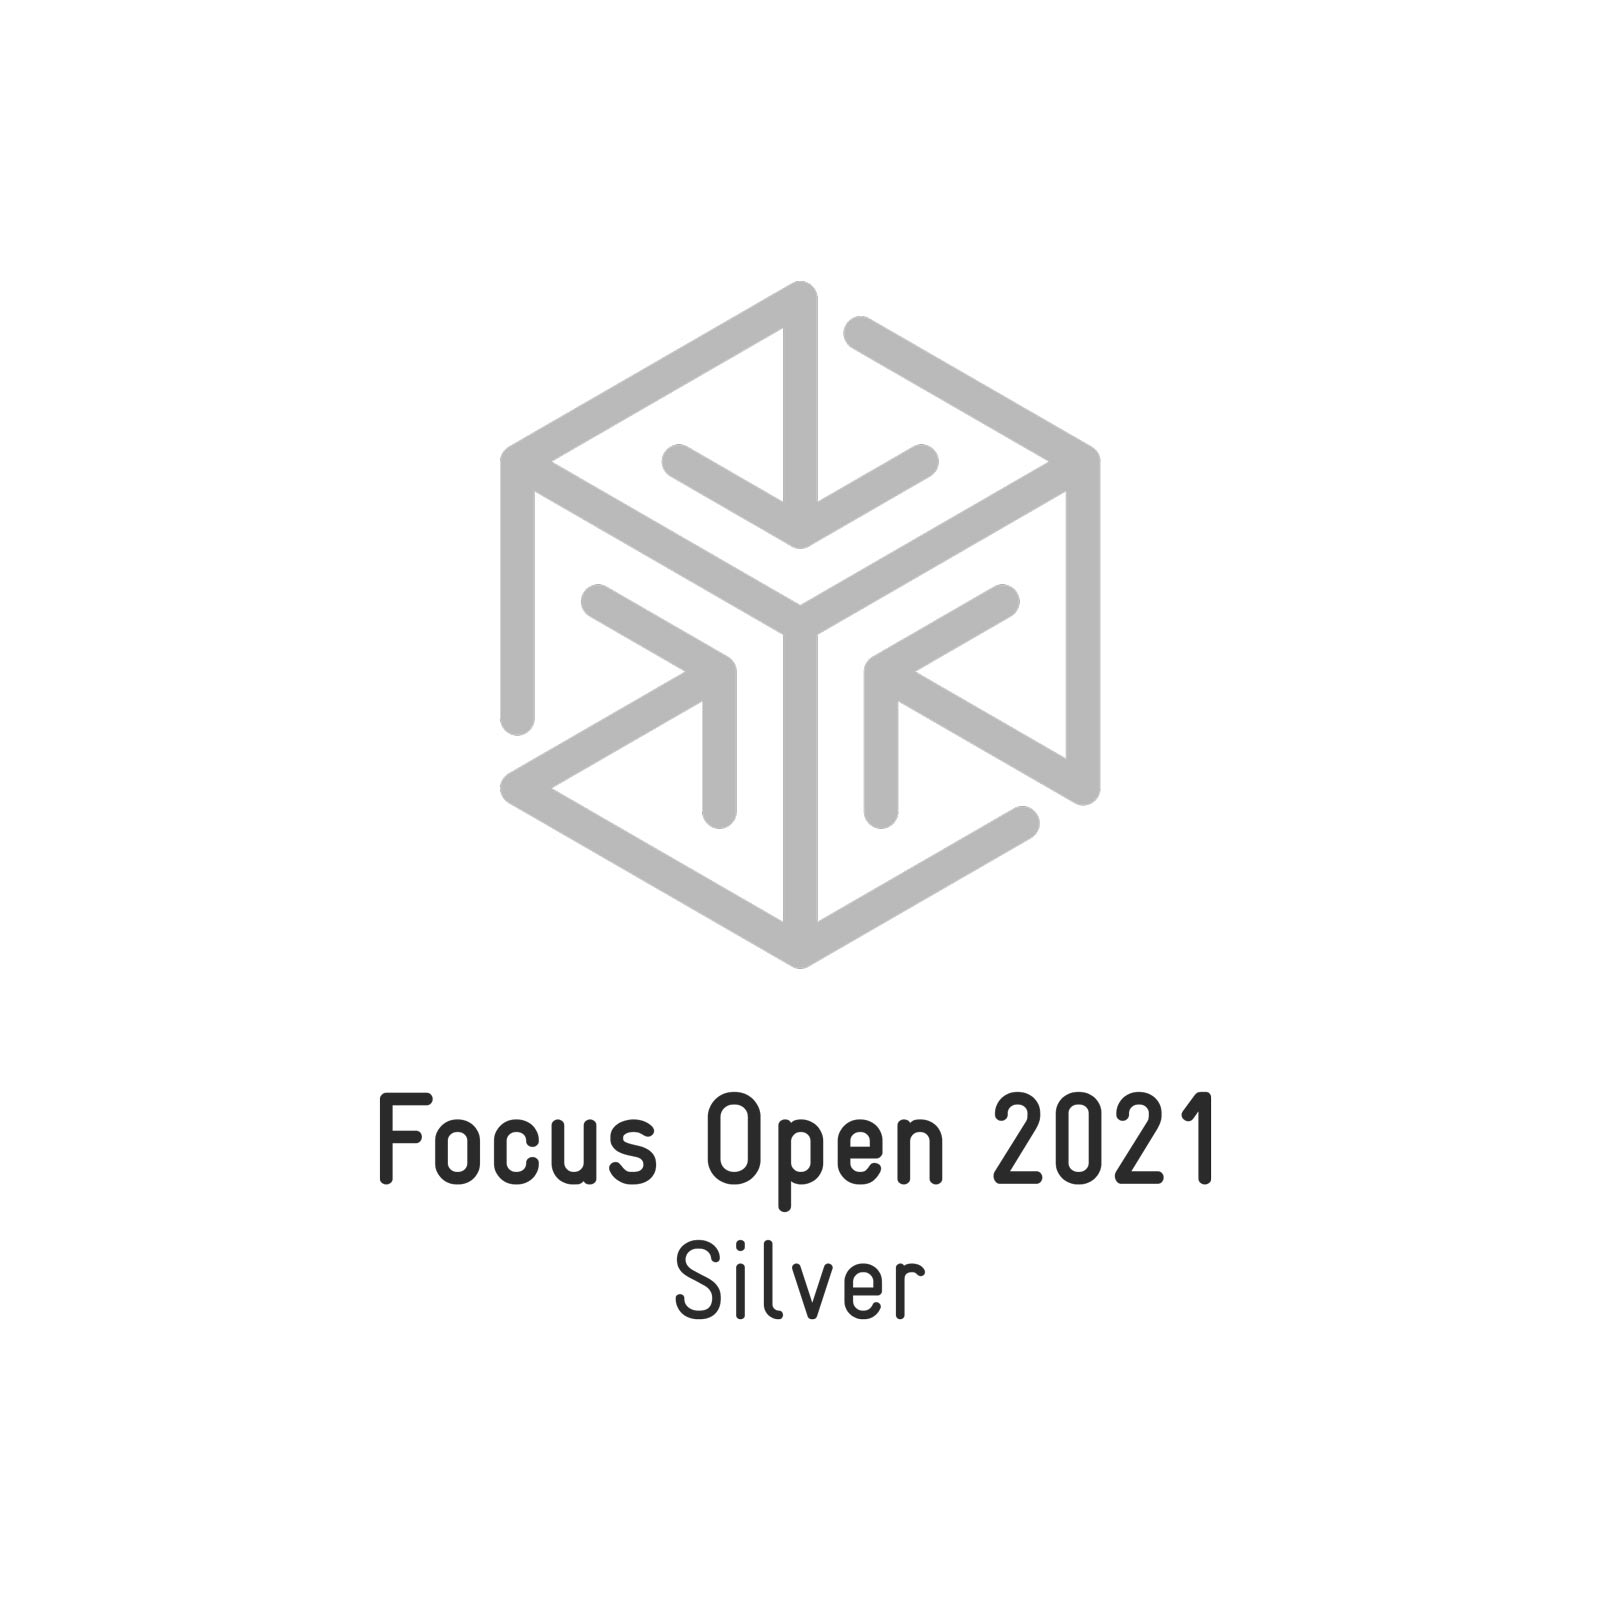 2021 Focus Open logo silver claim